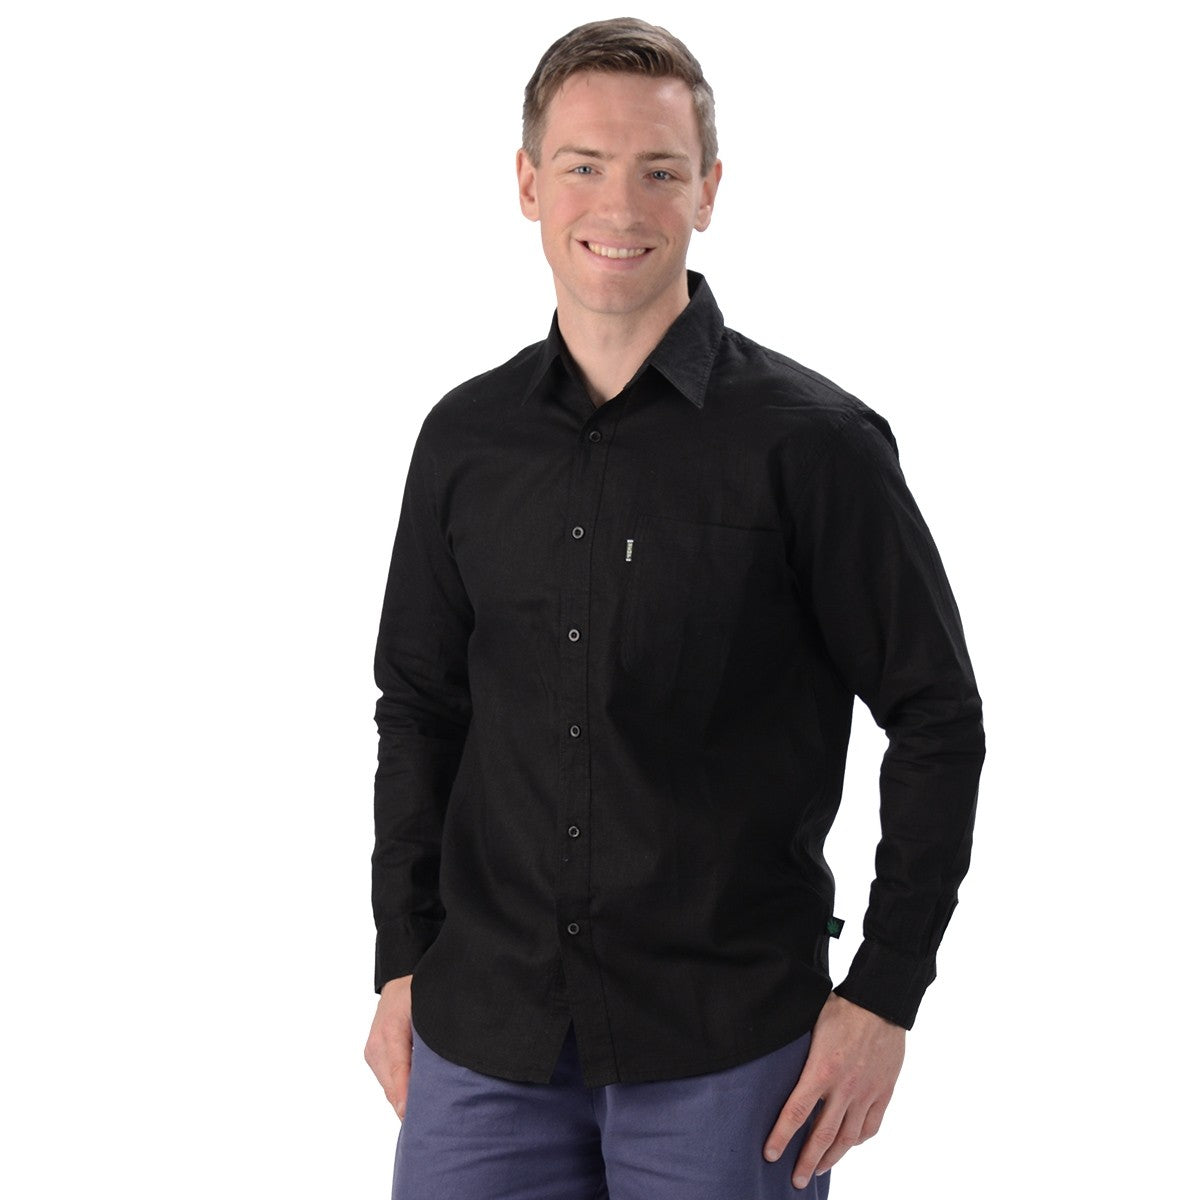 Men's Black Hemp and Organic Cotton Dress Shirt by Effort's Eco Essentials